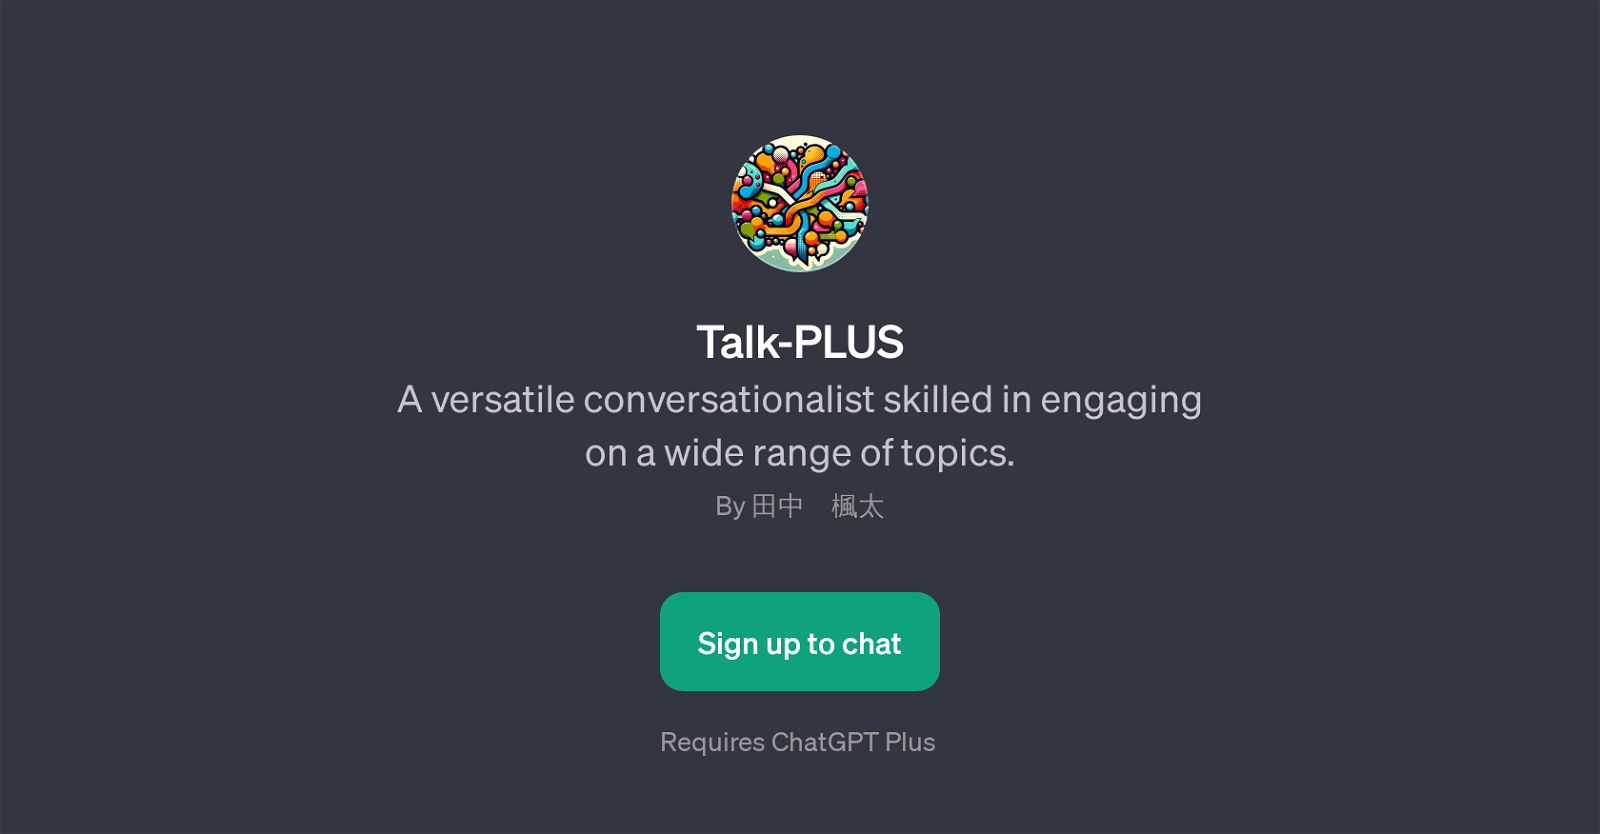 Talk-PLUS website